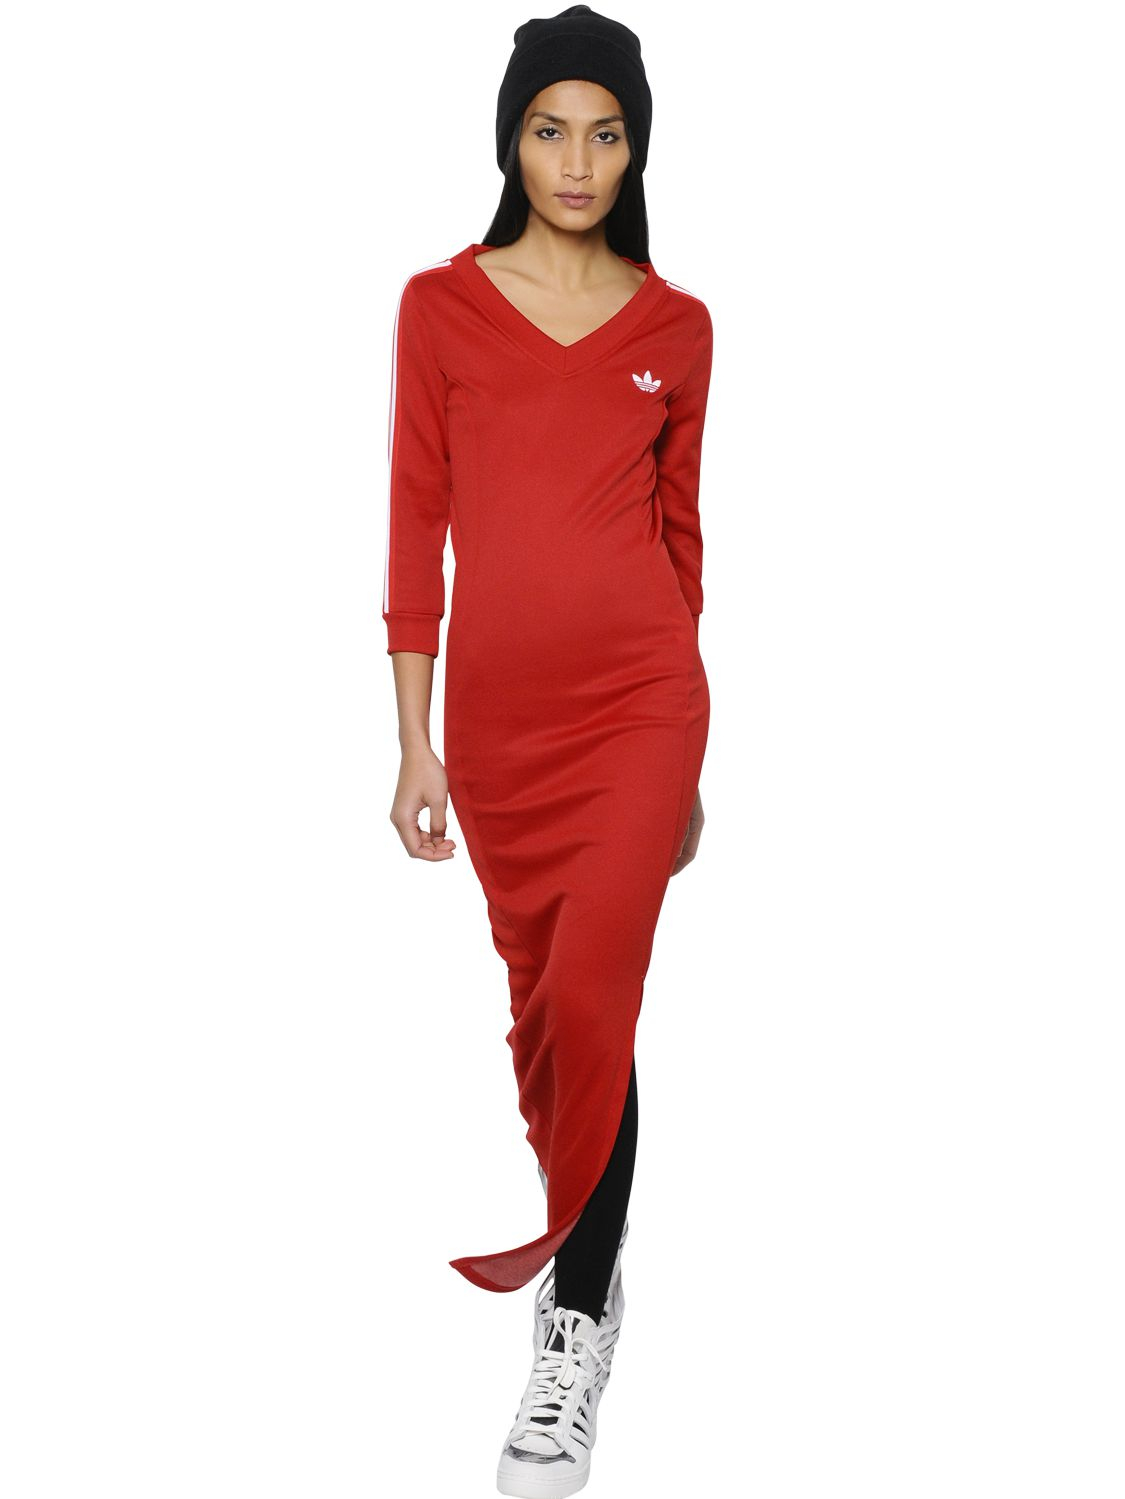 Jeremy Scott for adidas Striped Jersey Dress in Red | Lyst UK